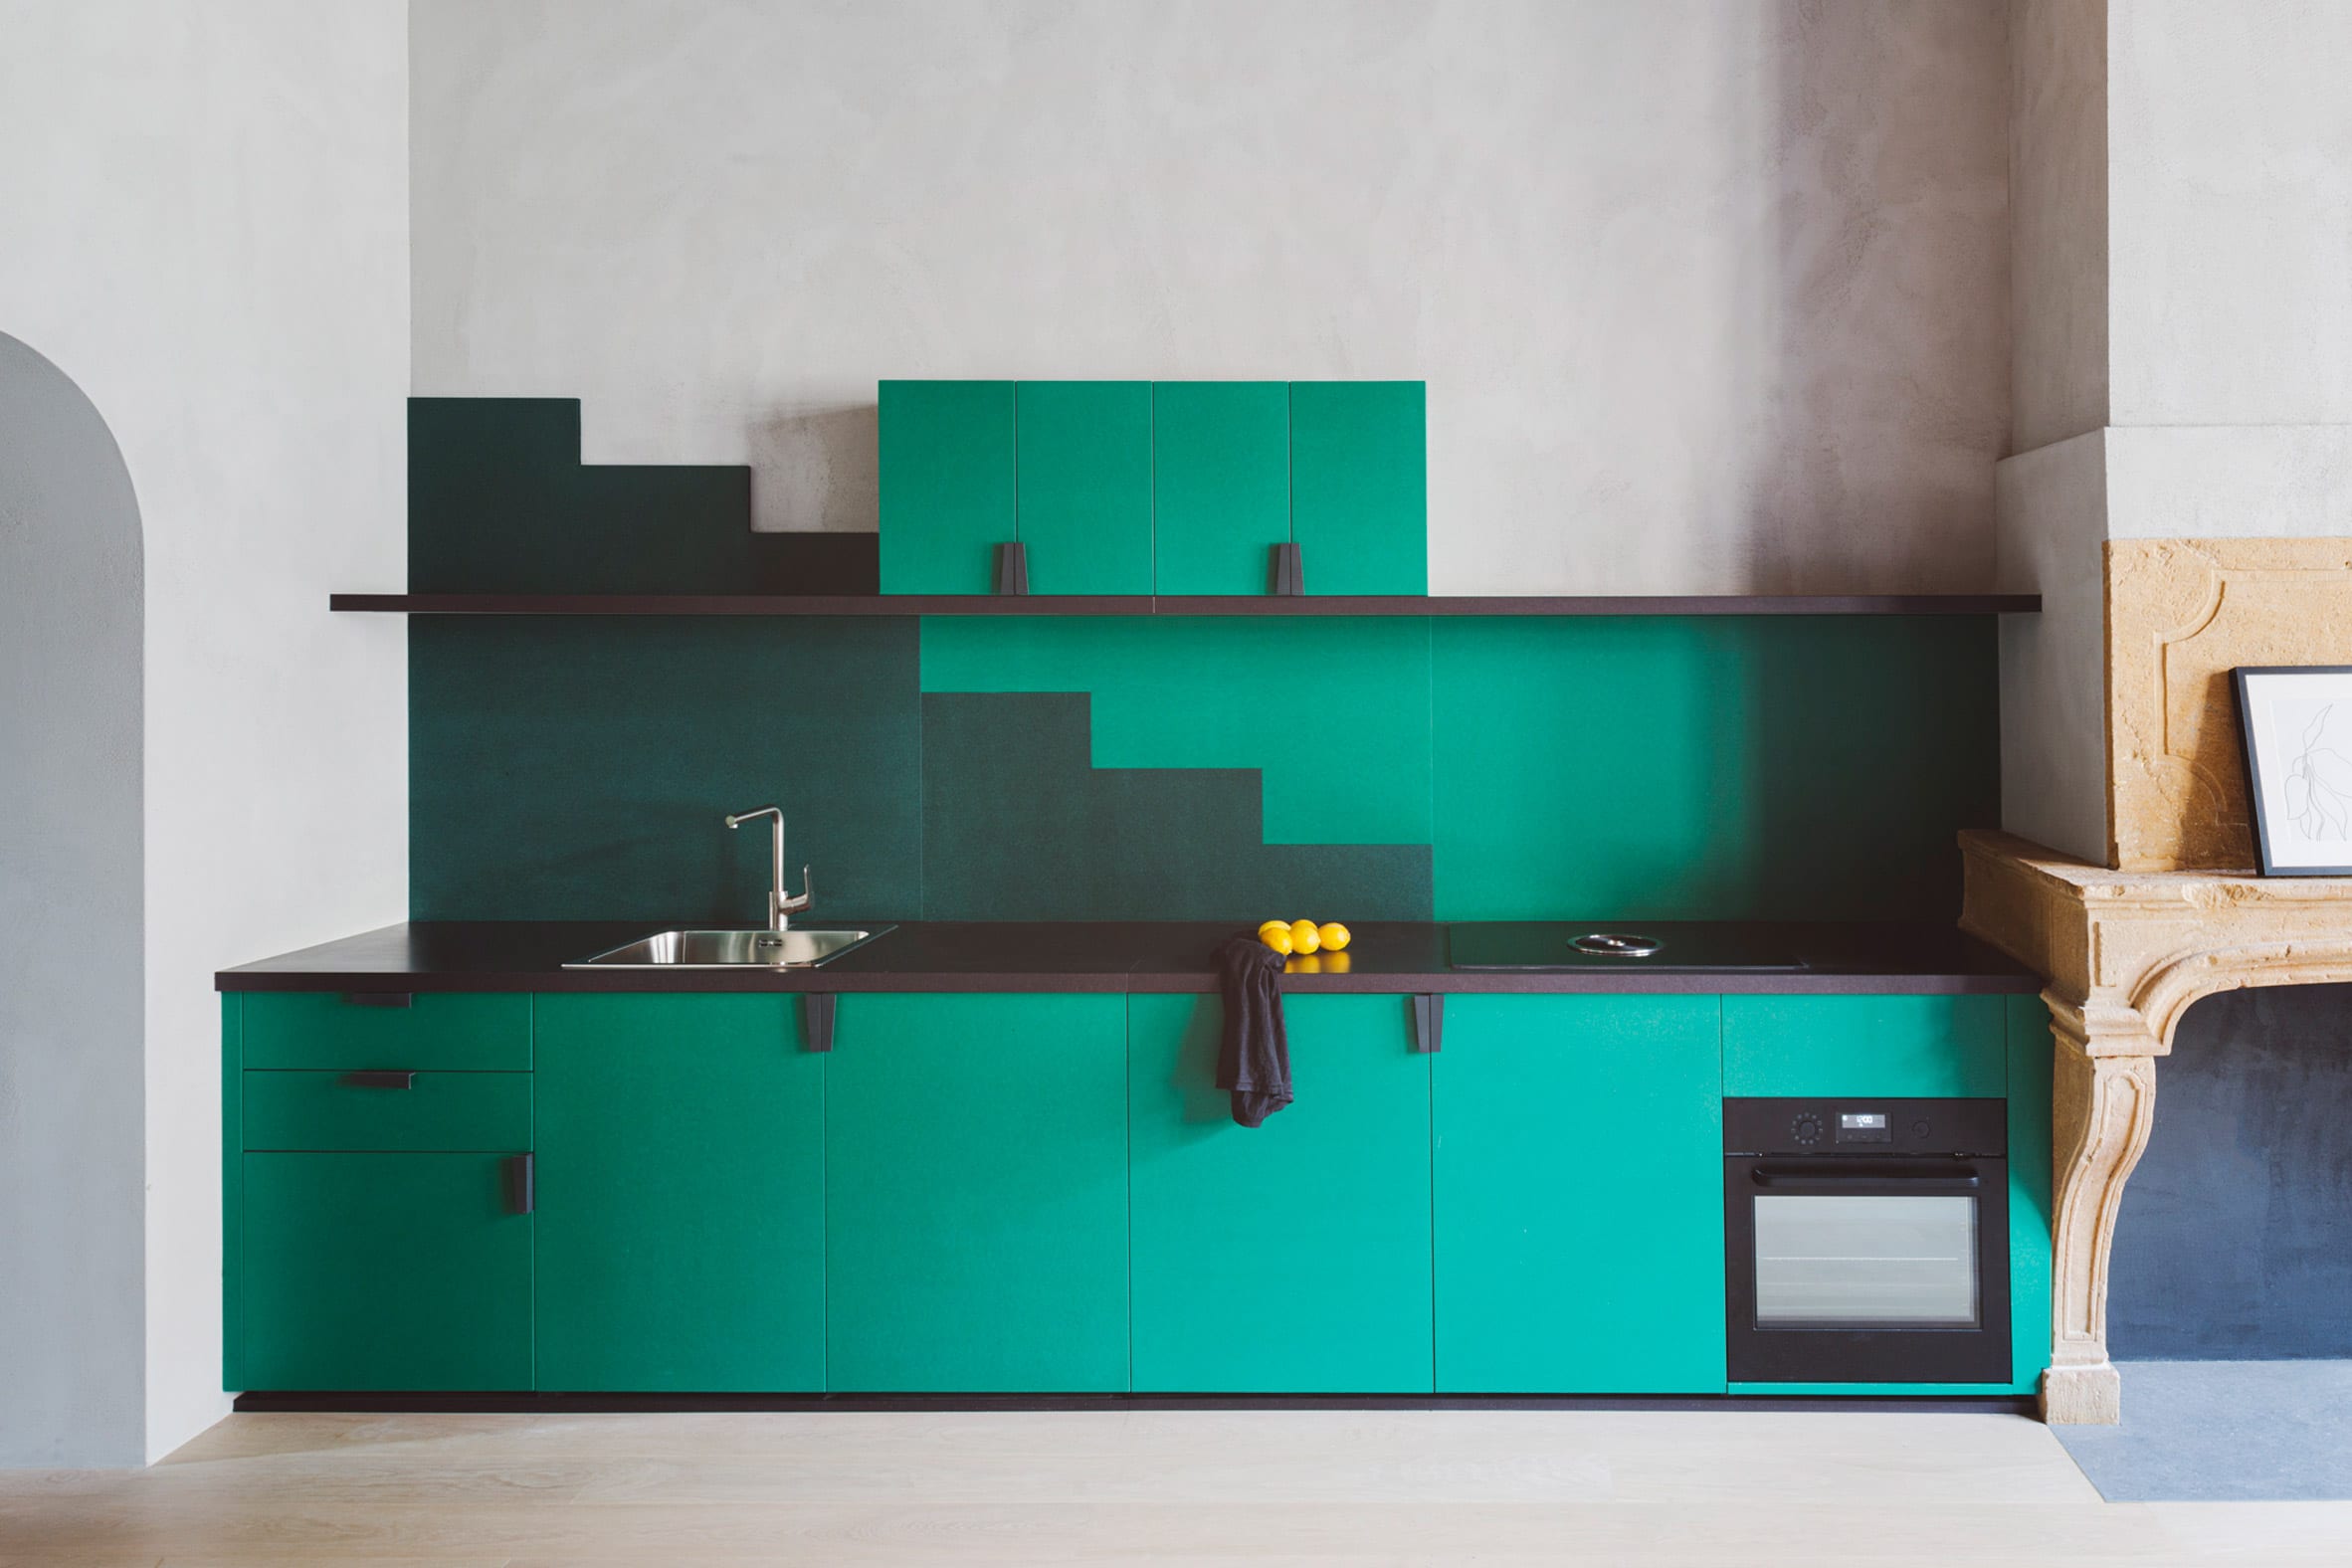 Green geometric one-wall kitchen by Studio Razavi